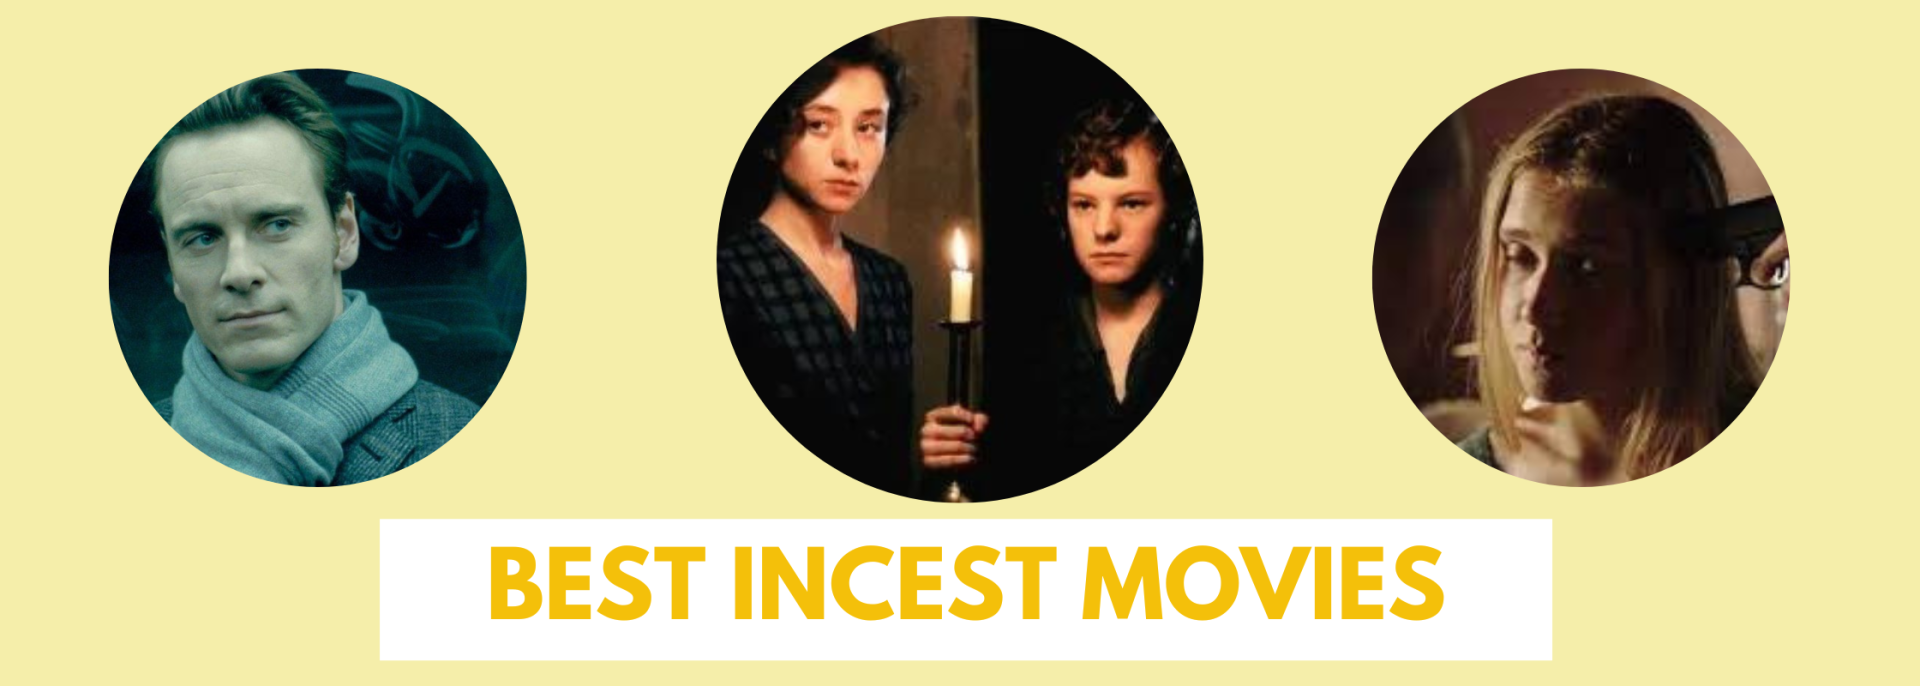 incest movies